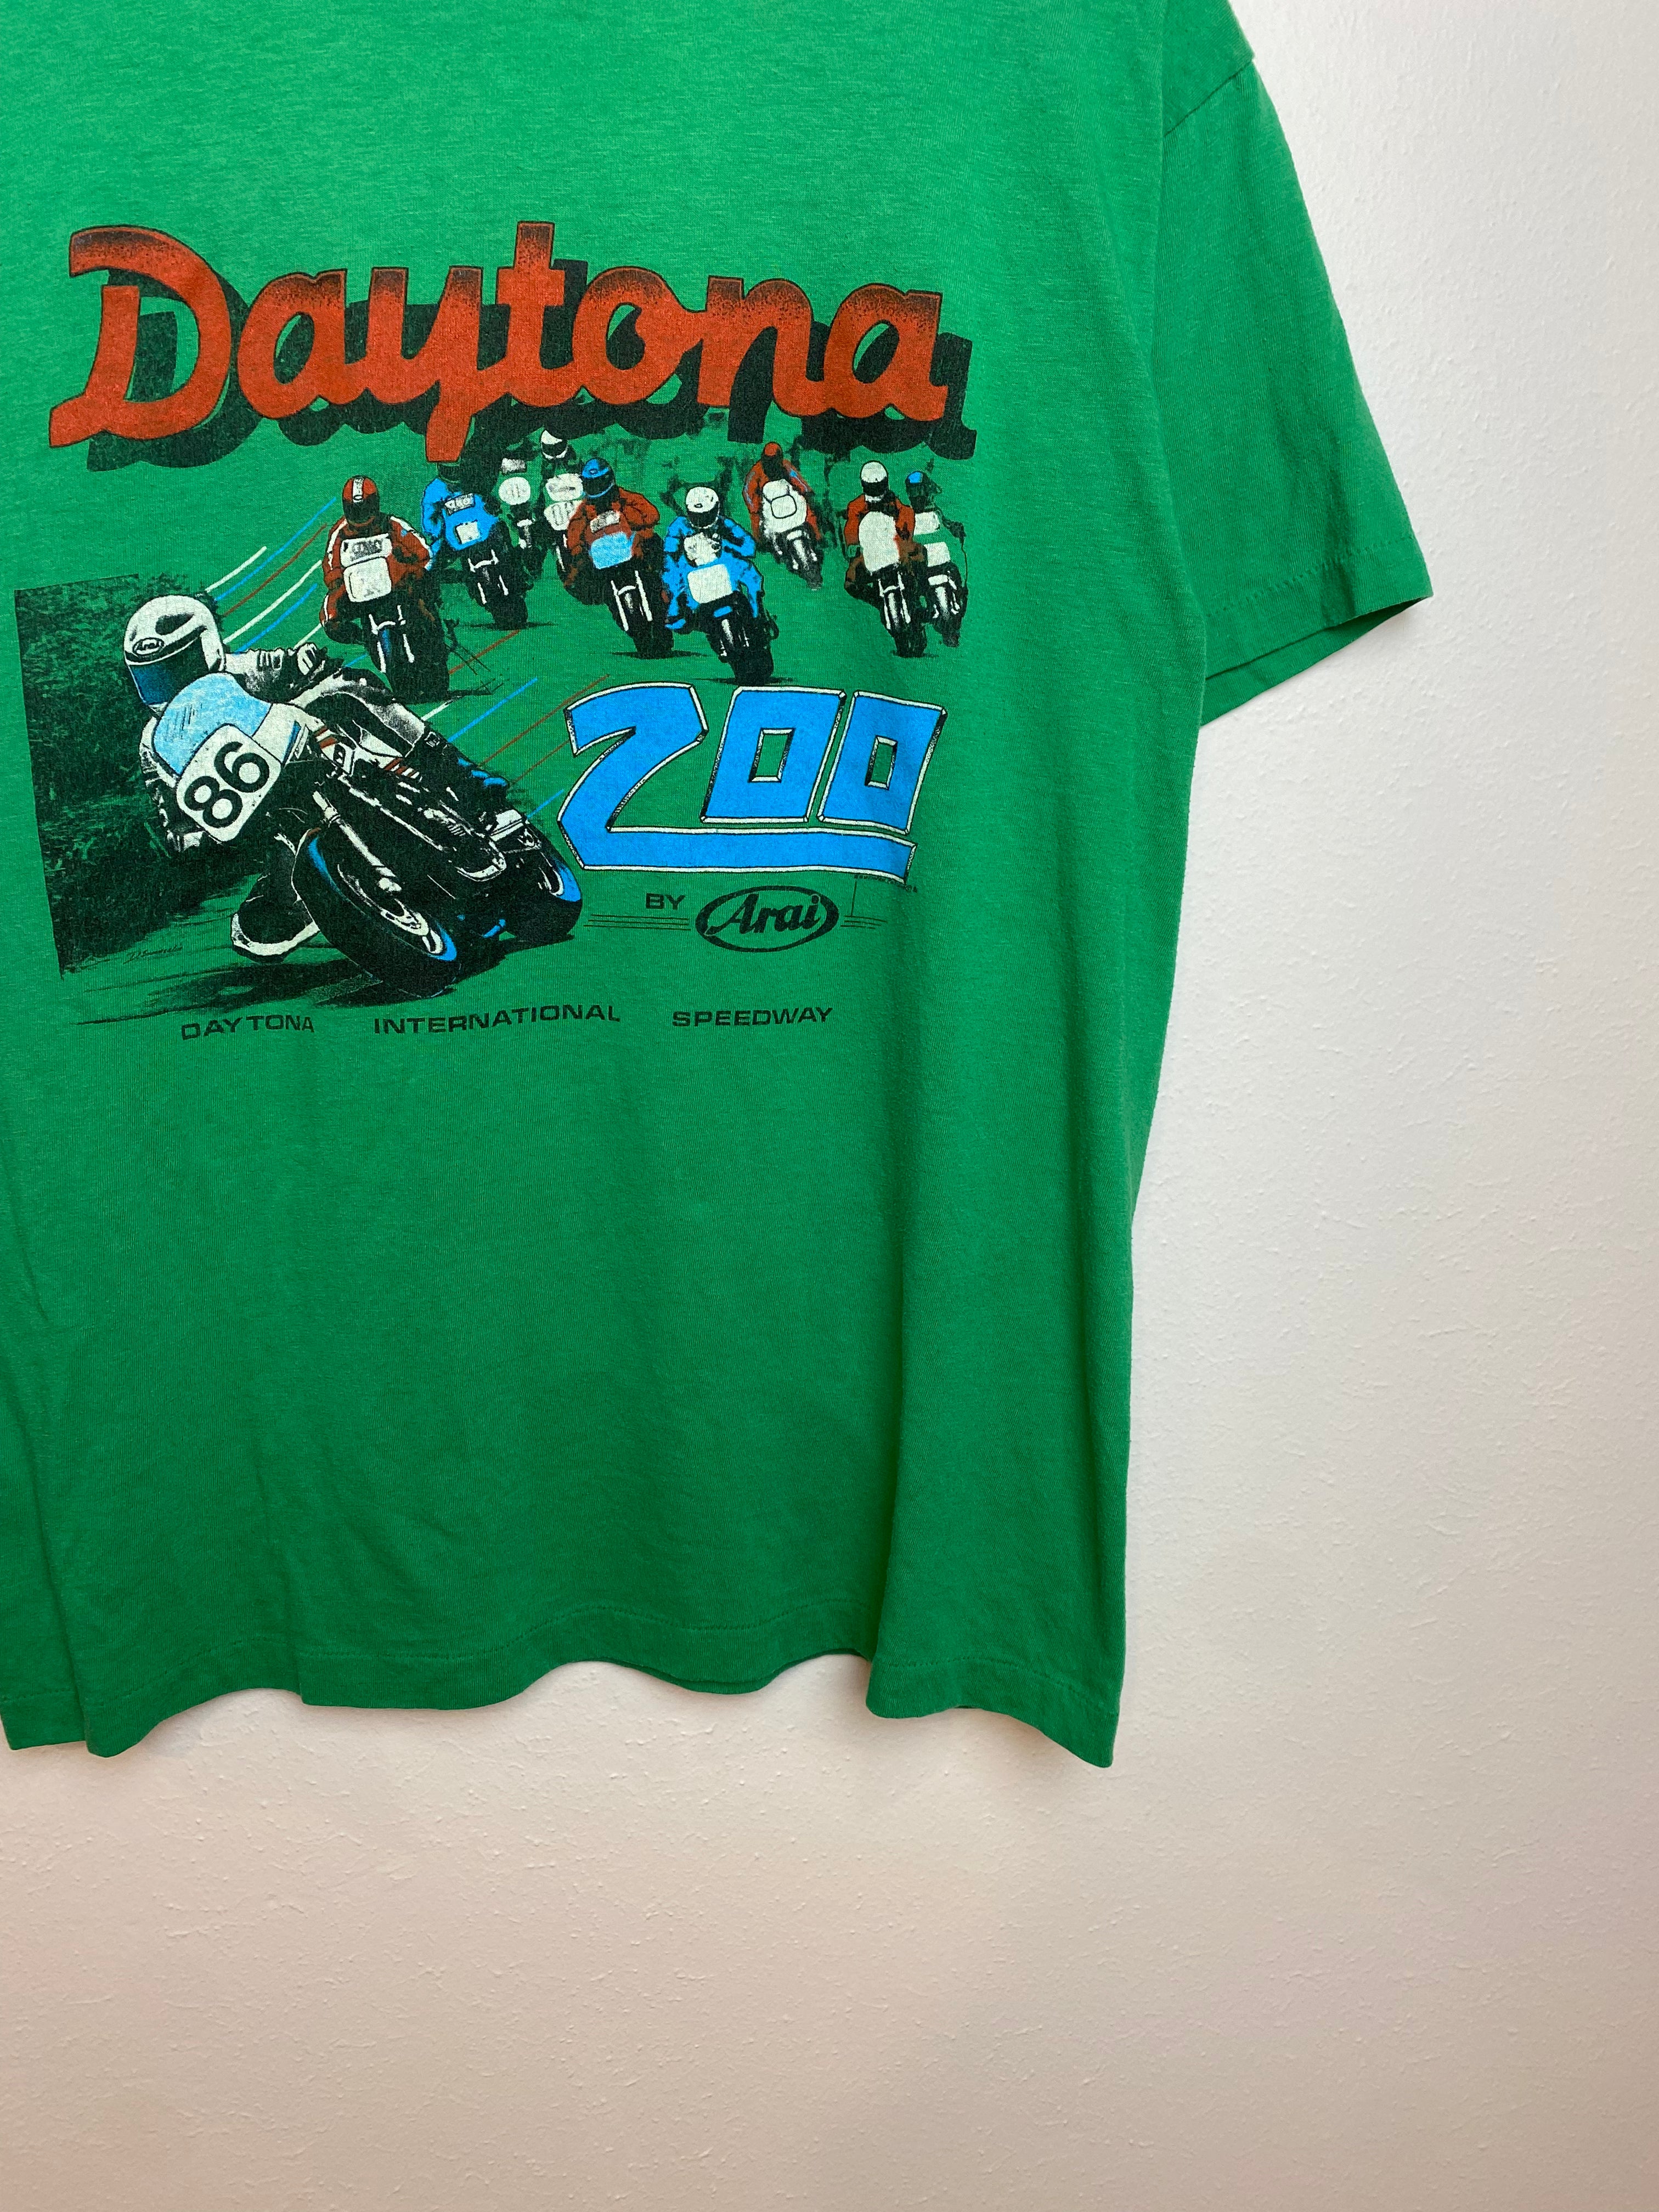 1980s Daytona 200 T-Shirt (M/L)